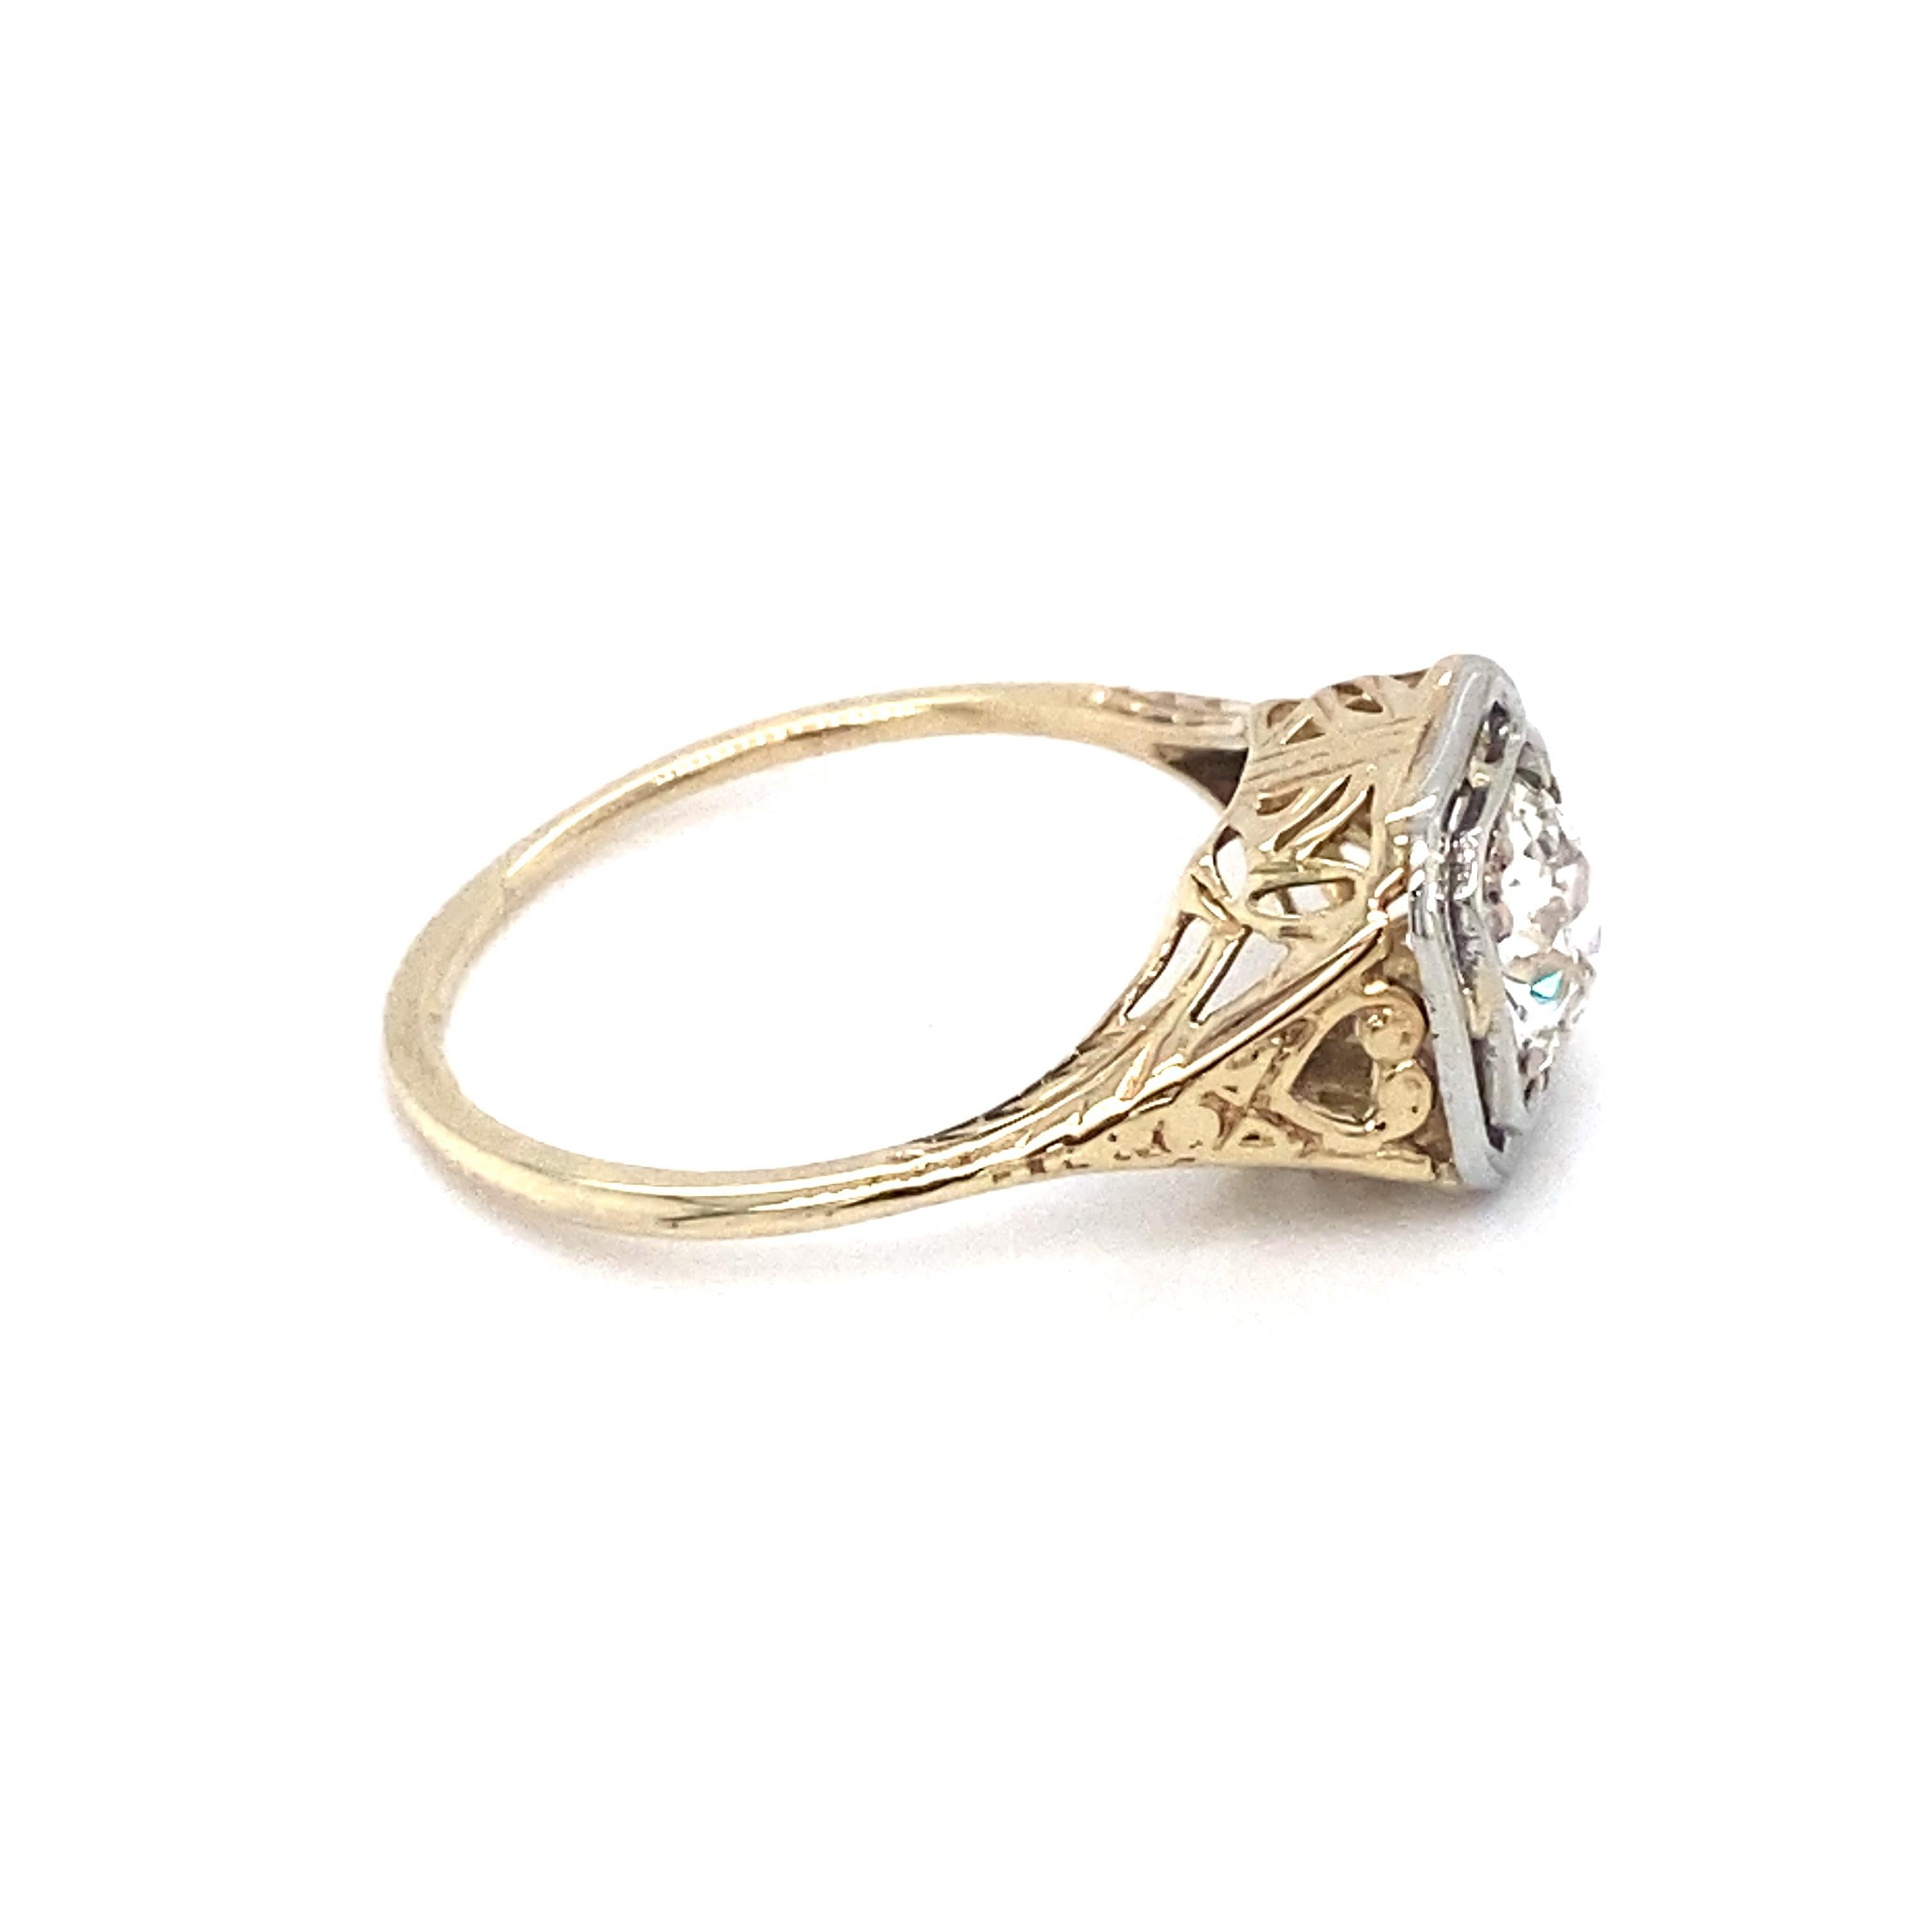 Circa 1920 Art Deco 0.95 Carat Diamond Ring in Two Tone 14K/18K Gold Excellent état - En vente à Atlanta, GA